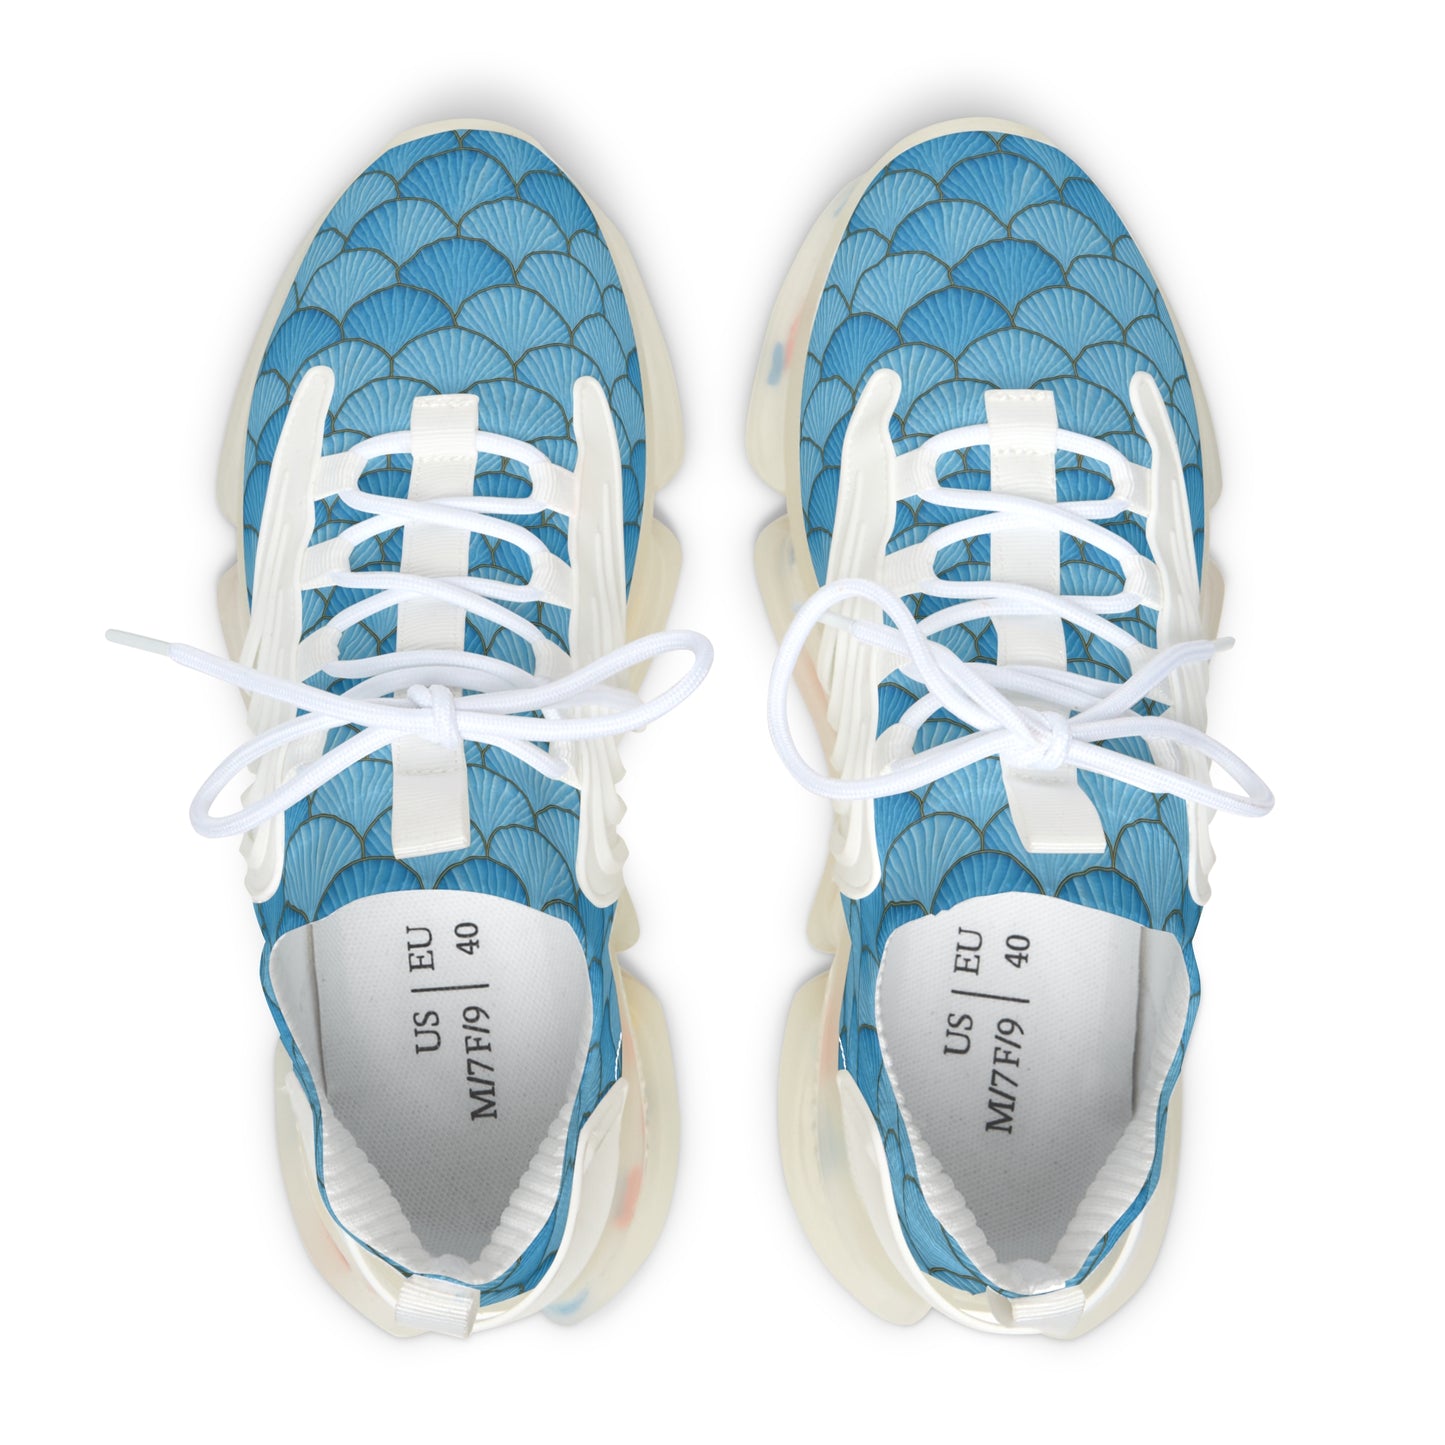 Stunning Blue Seashell Mermaid Design Women's Mesh Sneakers - Breathable and Comfortable Footwear